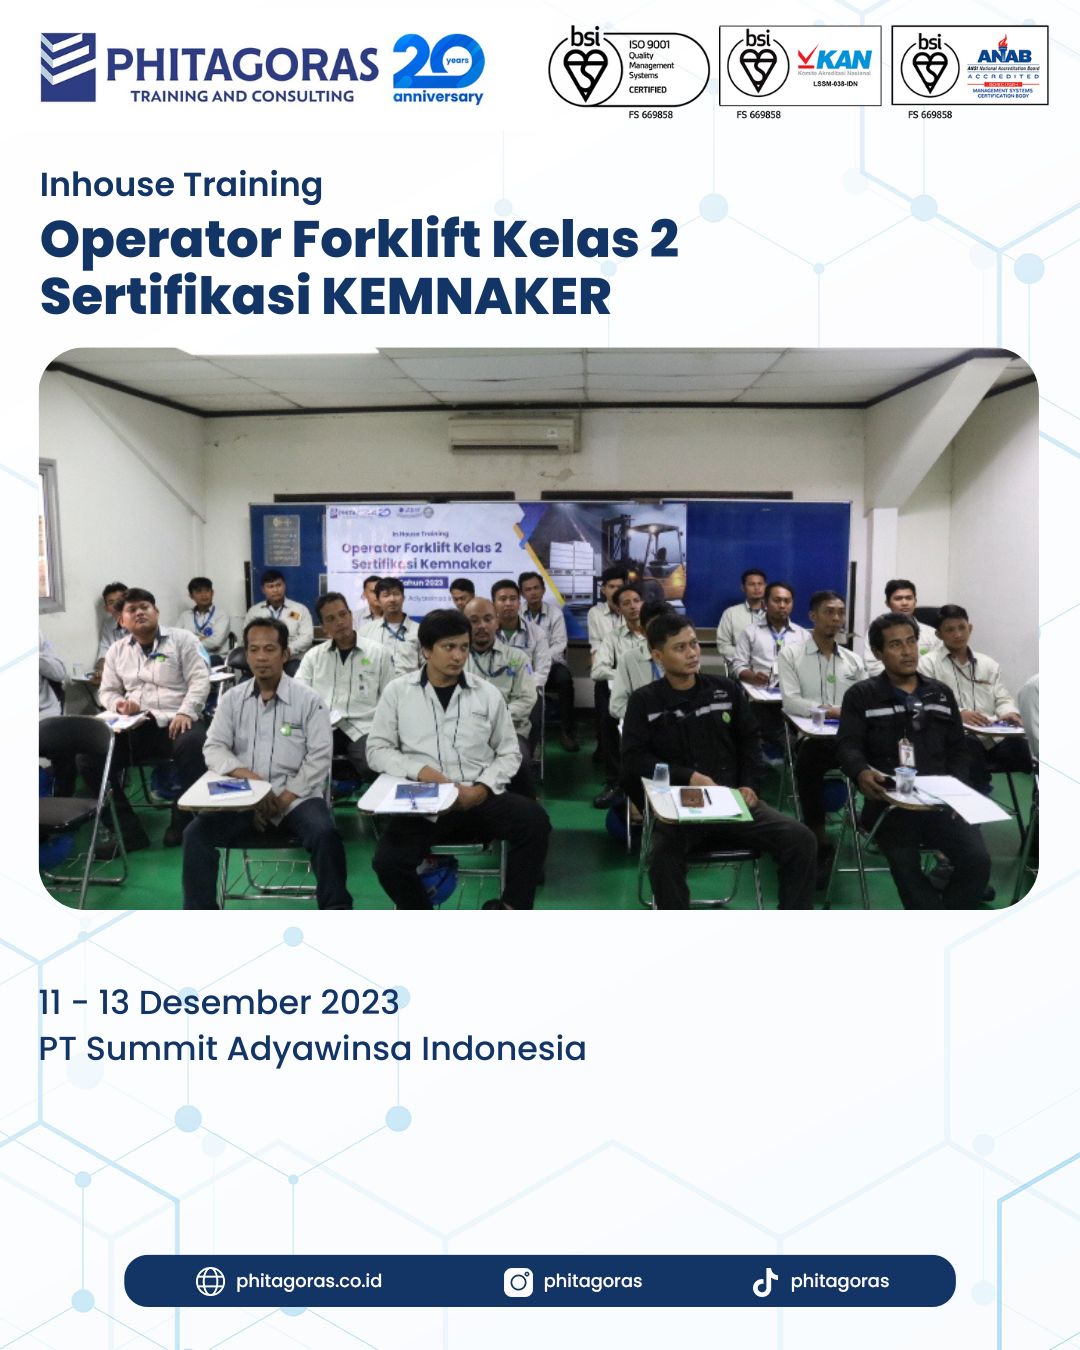 Inhouse Training Operator Forklift Kelas 2 Sertifikasi KEMNAKER - PT Summit Adyawinsa Indonesia